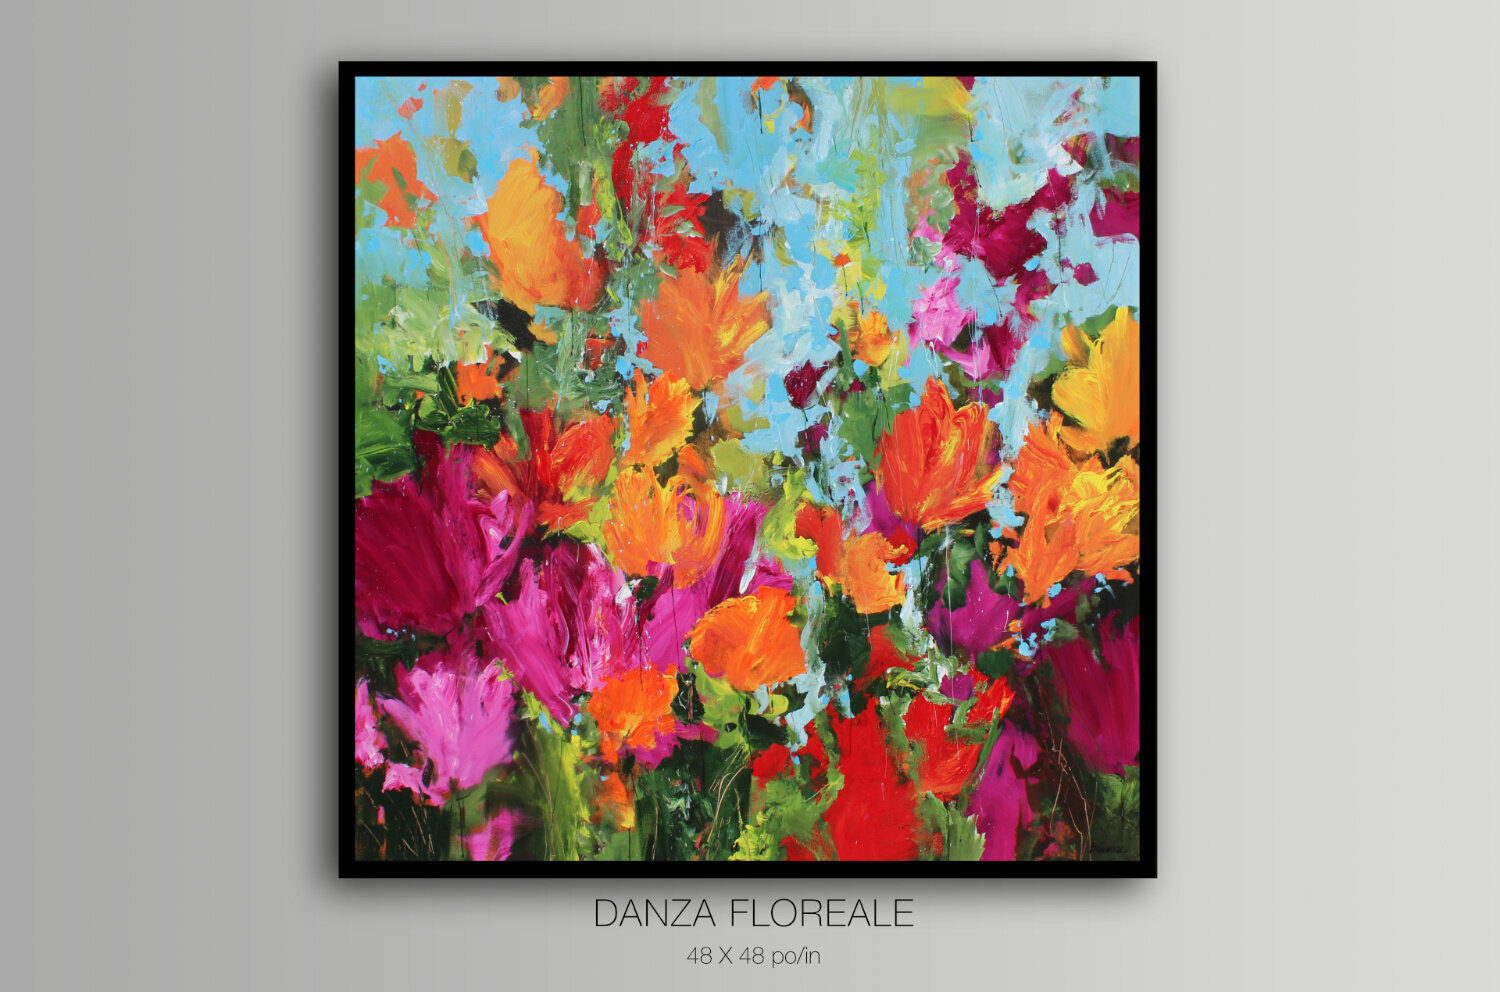 Danza Floreale - Organik Collection